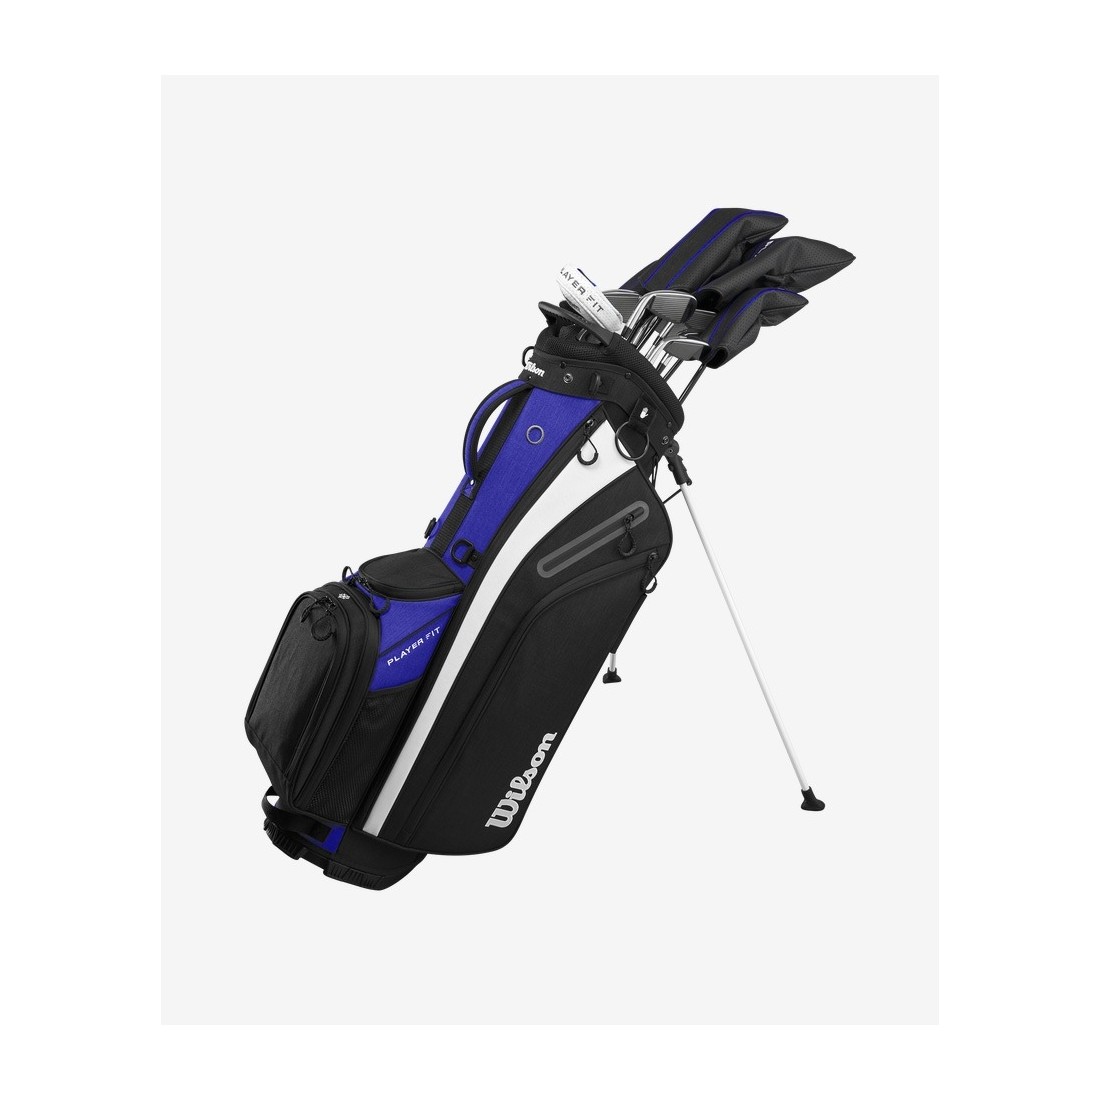 Wilson série golf Player Fit sac portable Acier vue sac